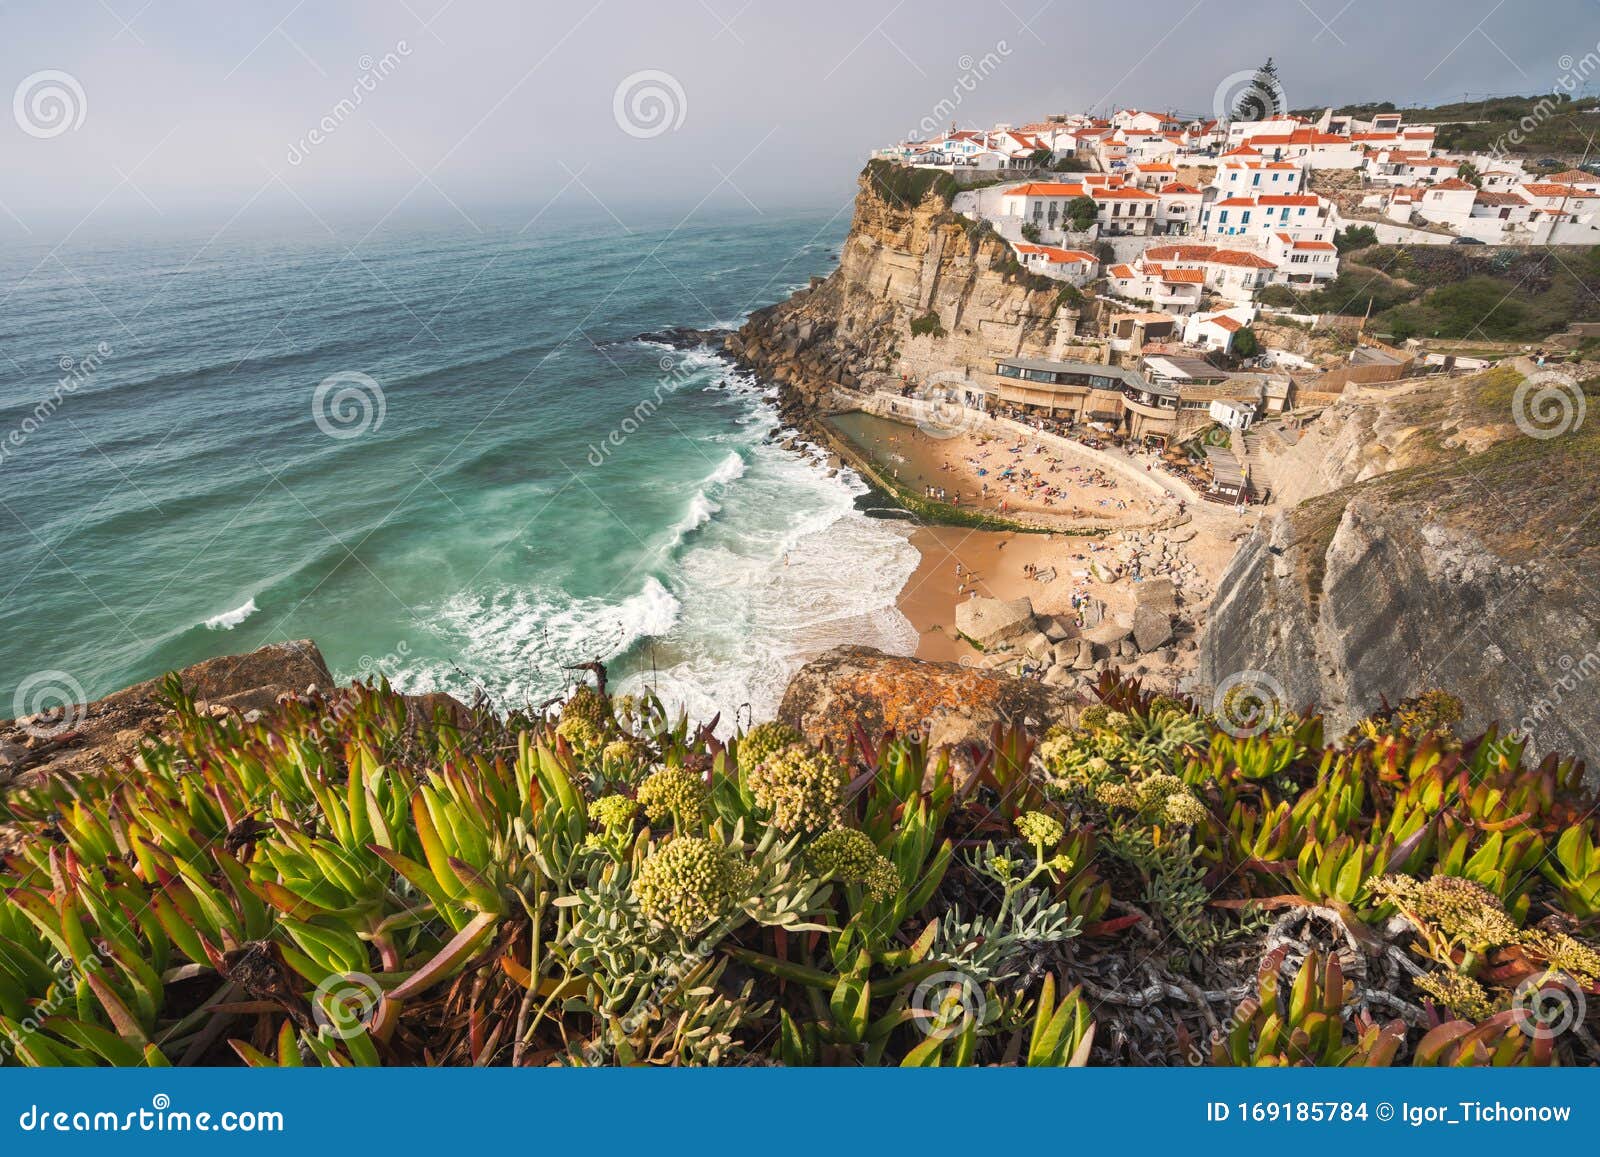 sintra, lisbon, portugal. azenhas do mar white village landmark on the cliff and atlantic ocean waves